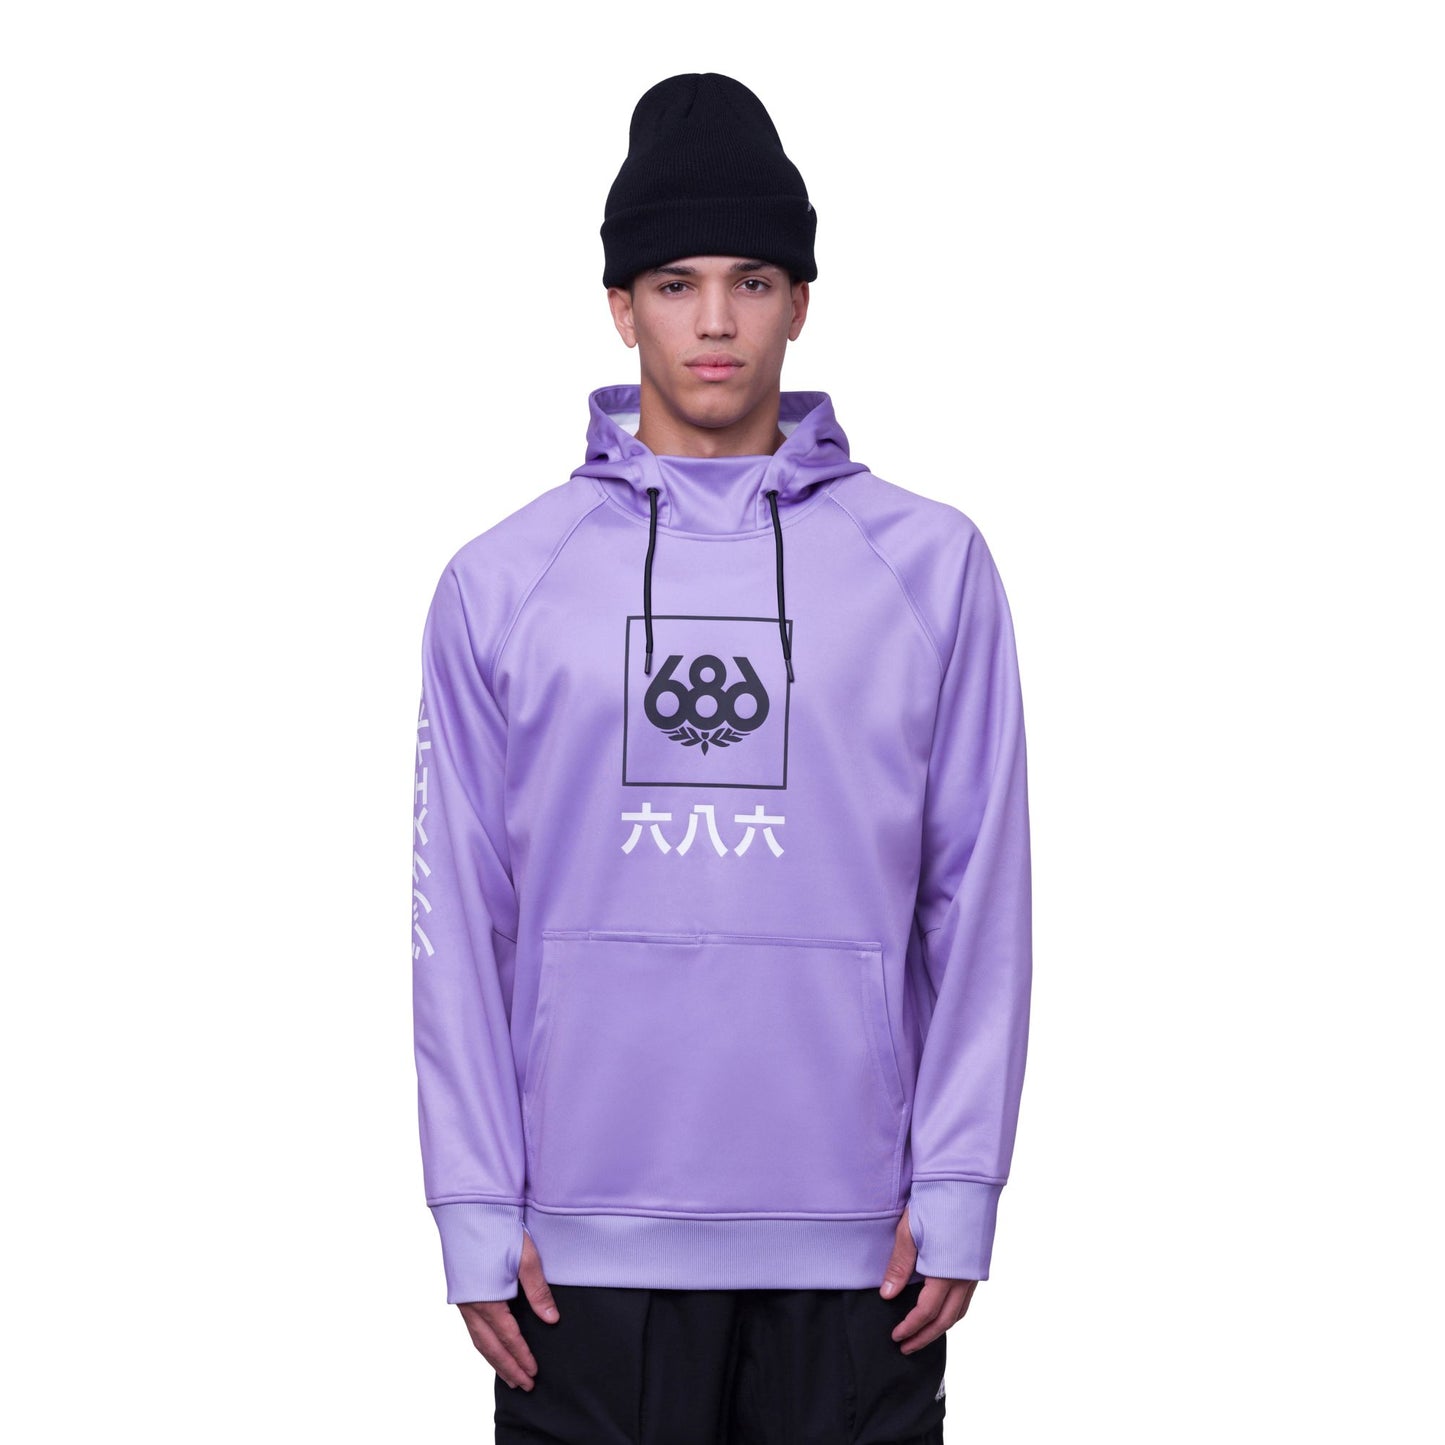 686 Bonded Fleece Pullover Hooded Pullover Sweatshirt Violet Sweatshirts & Hoodies